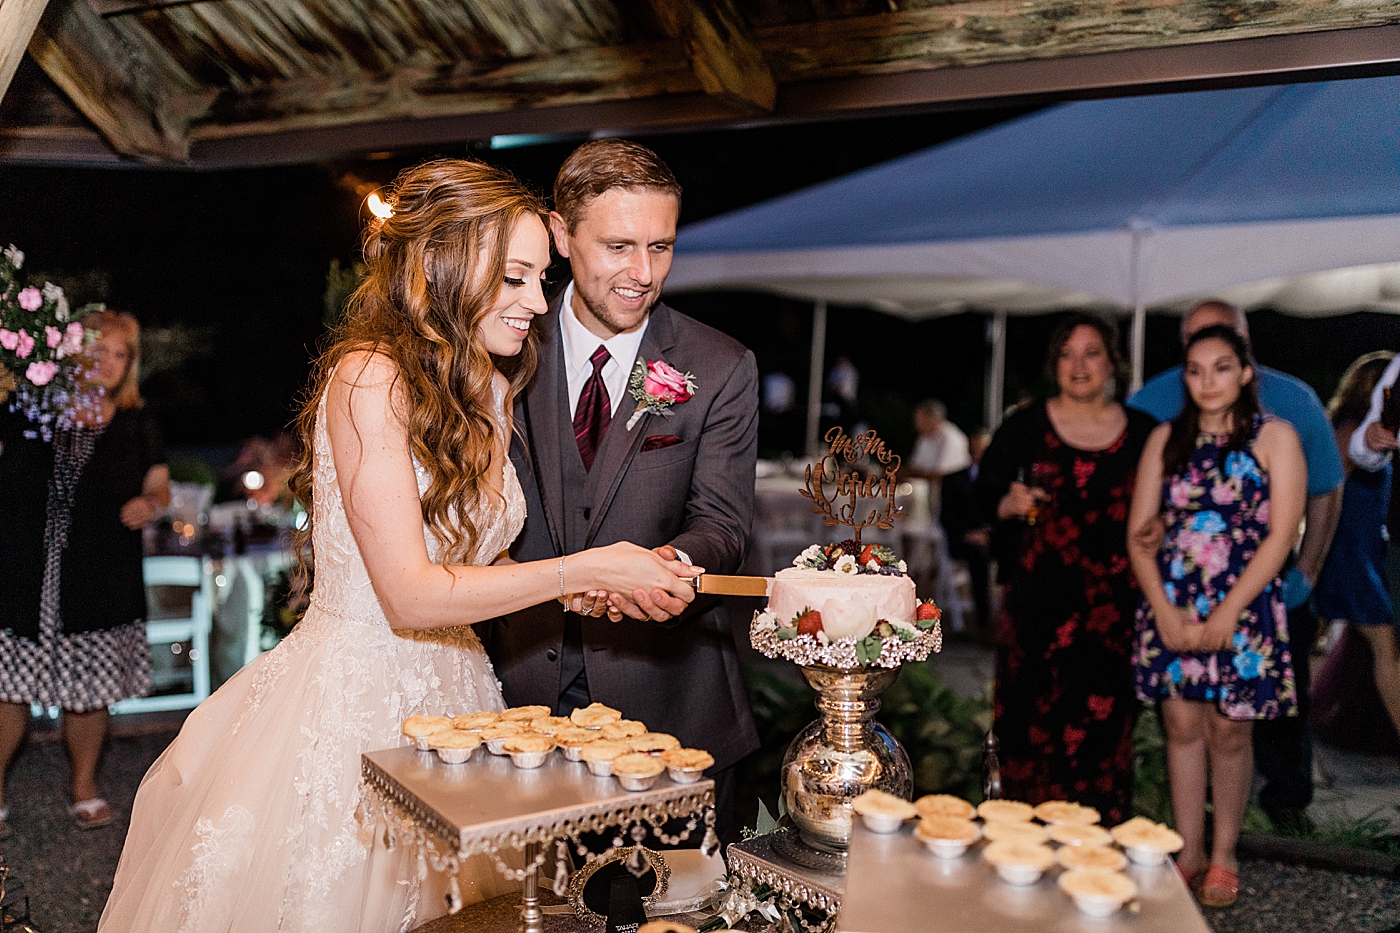 Wedding reception at Cedar Springs in Port Orchard, WA | Megan Montalvo Photography